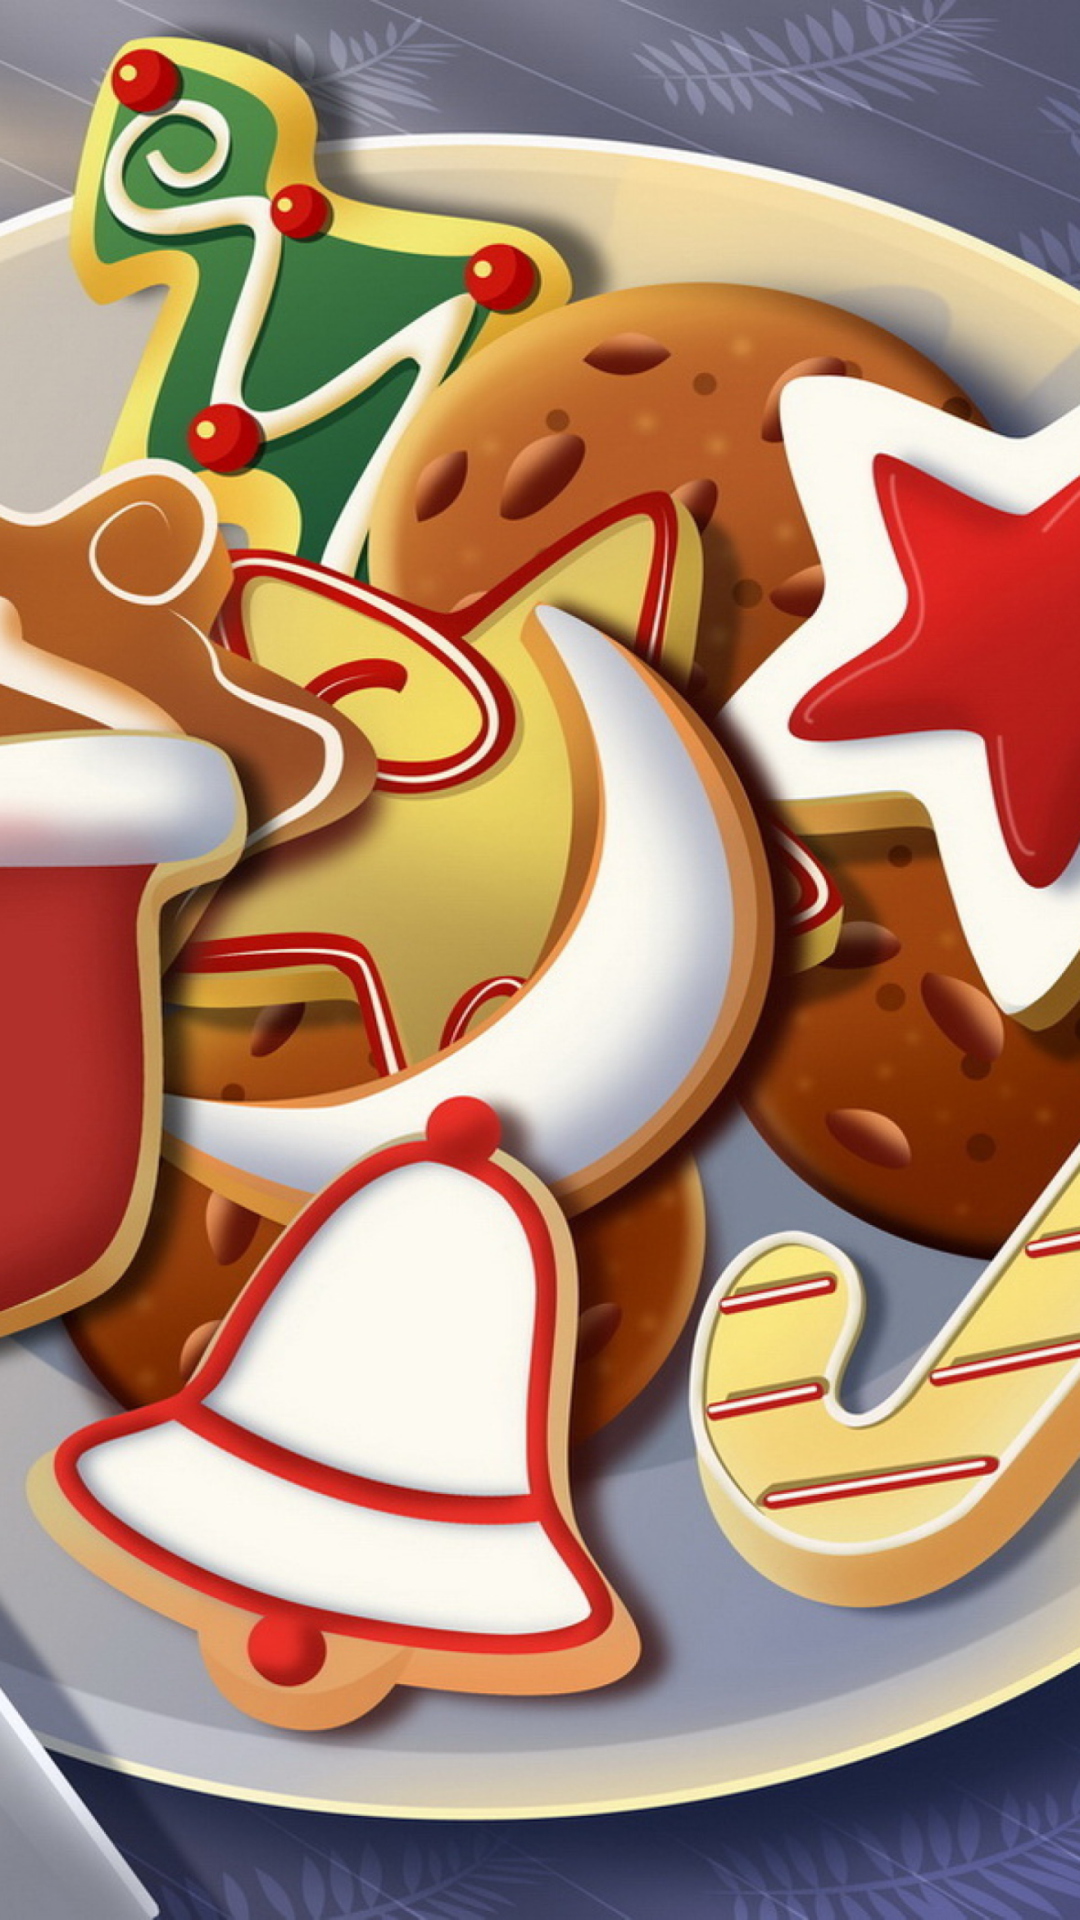 Sweets For Santa wallpaper 1080x1920